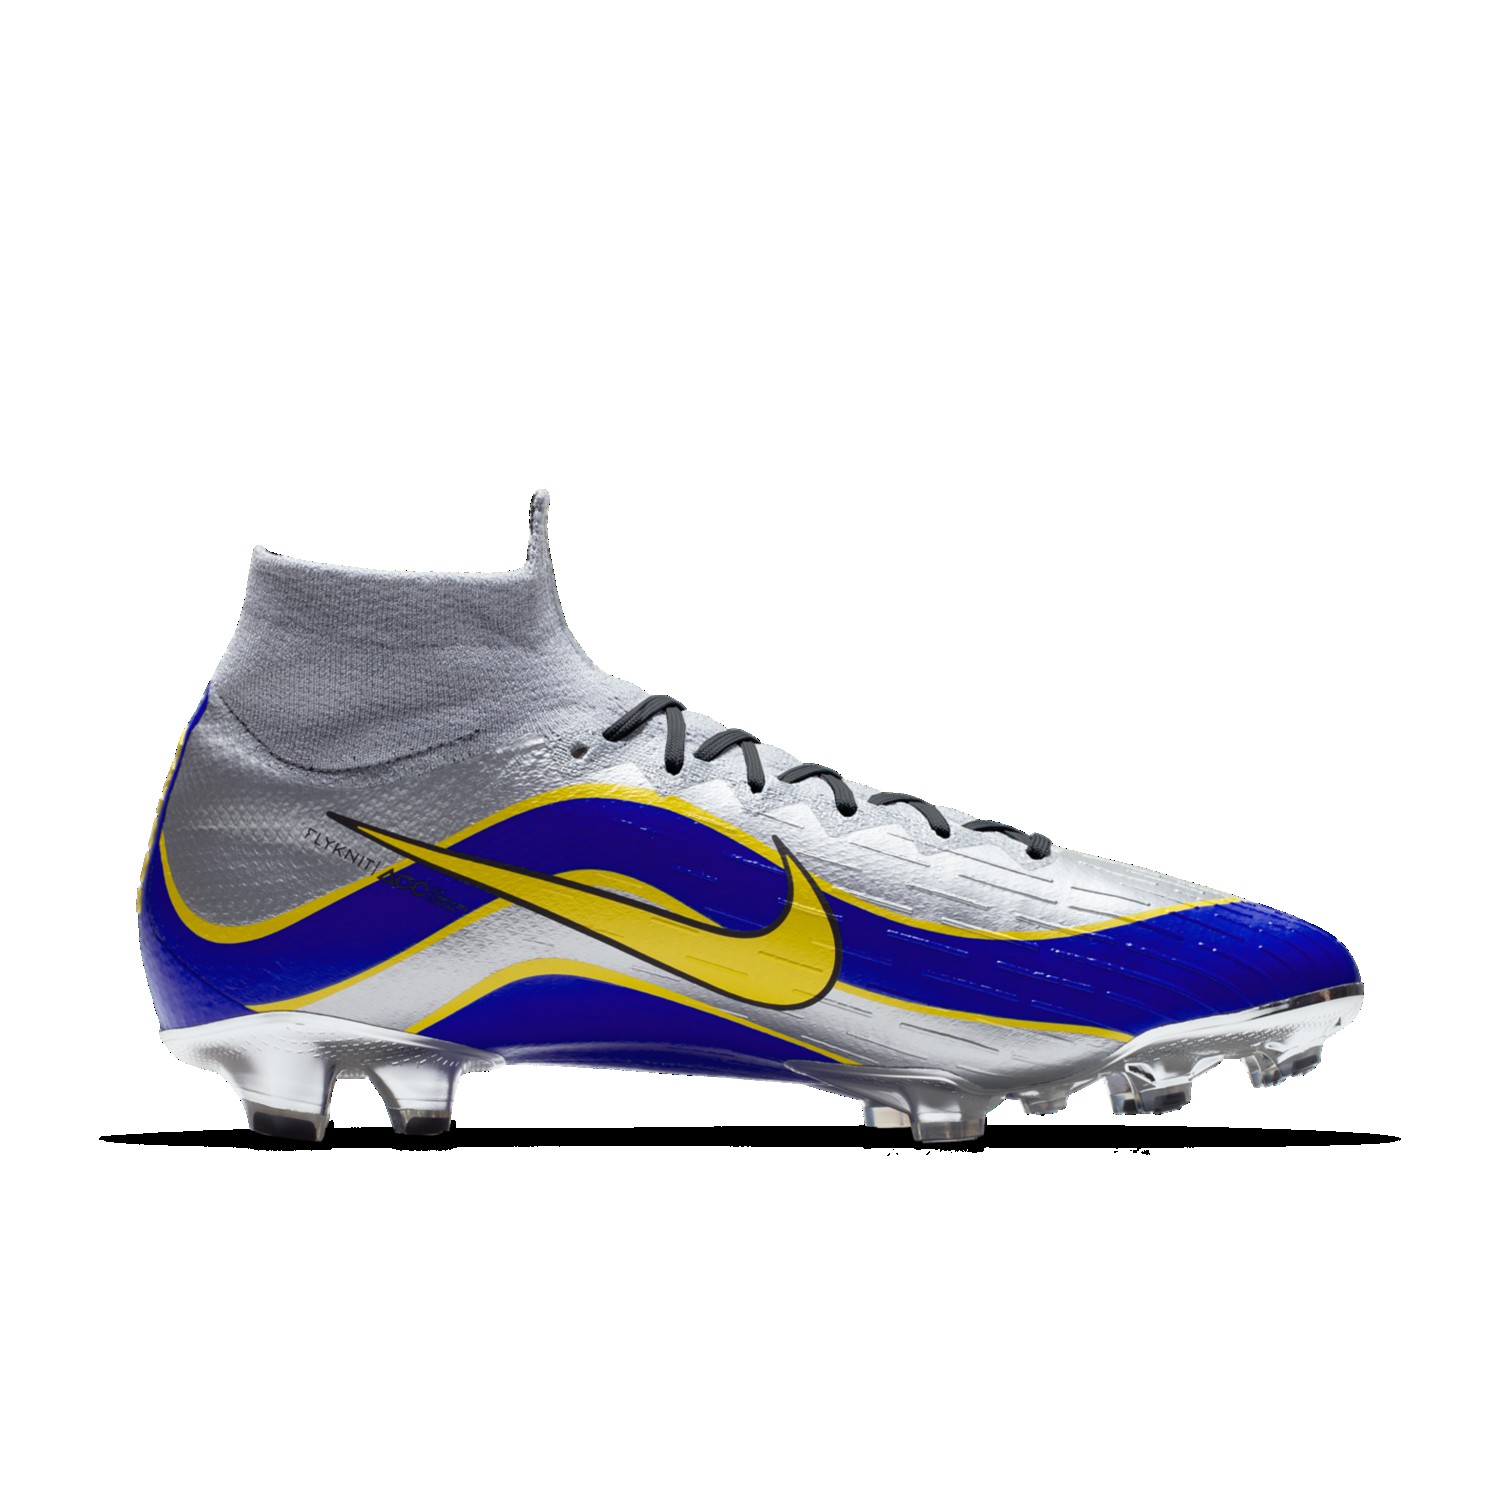 Nike Mercurial Superfly 360 Elite 1998 iD Football Boots - Football boots - Football shirt blog